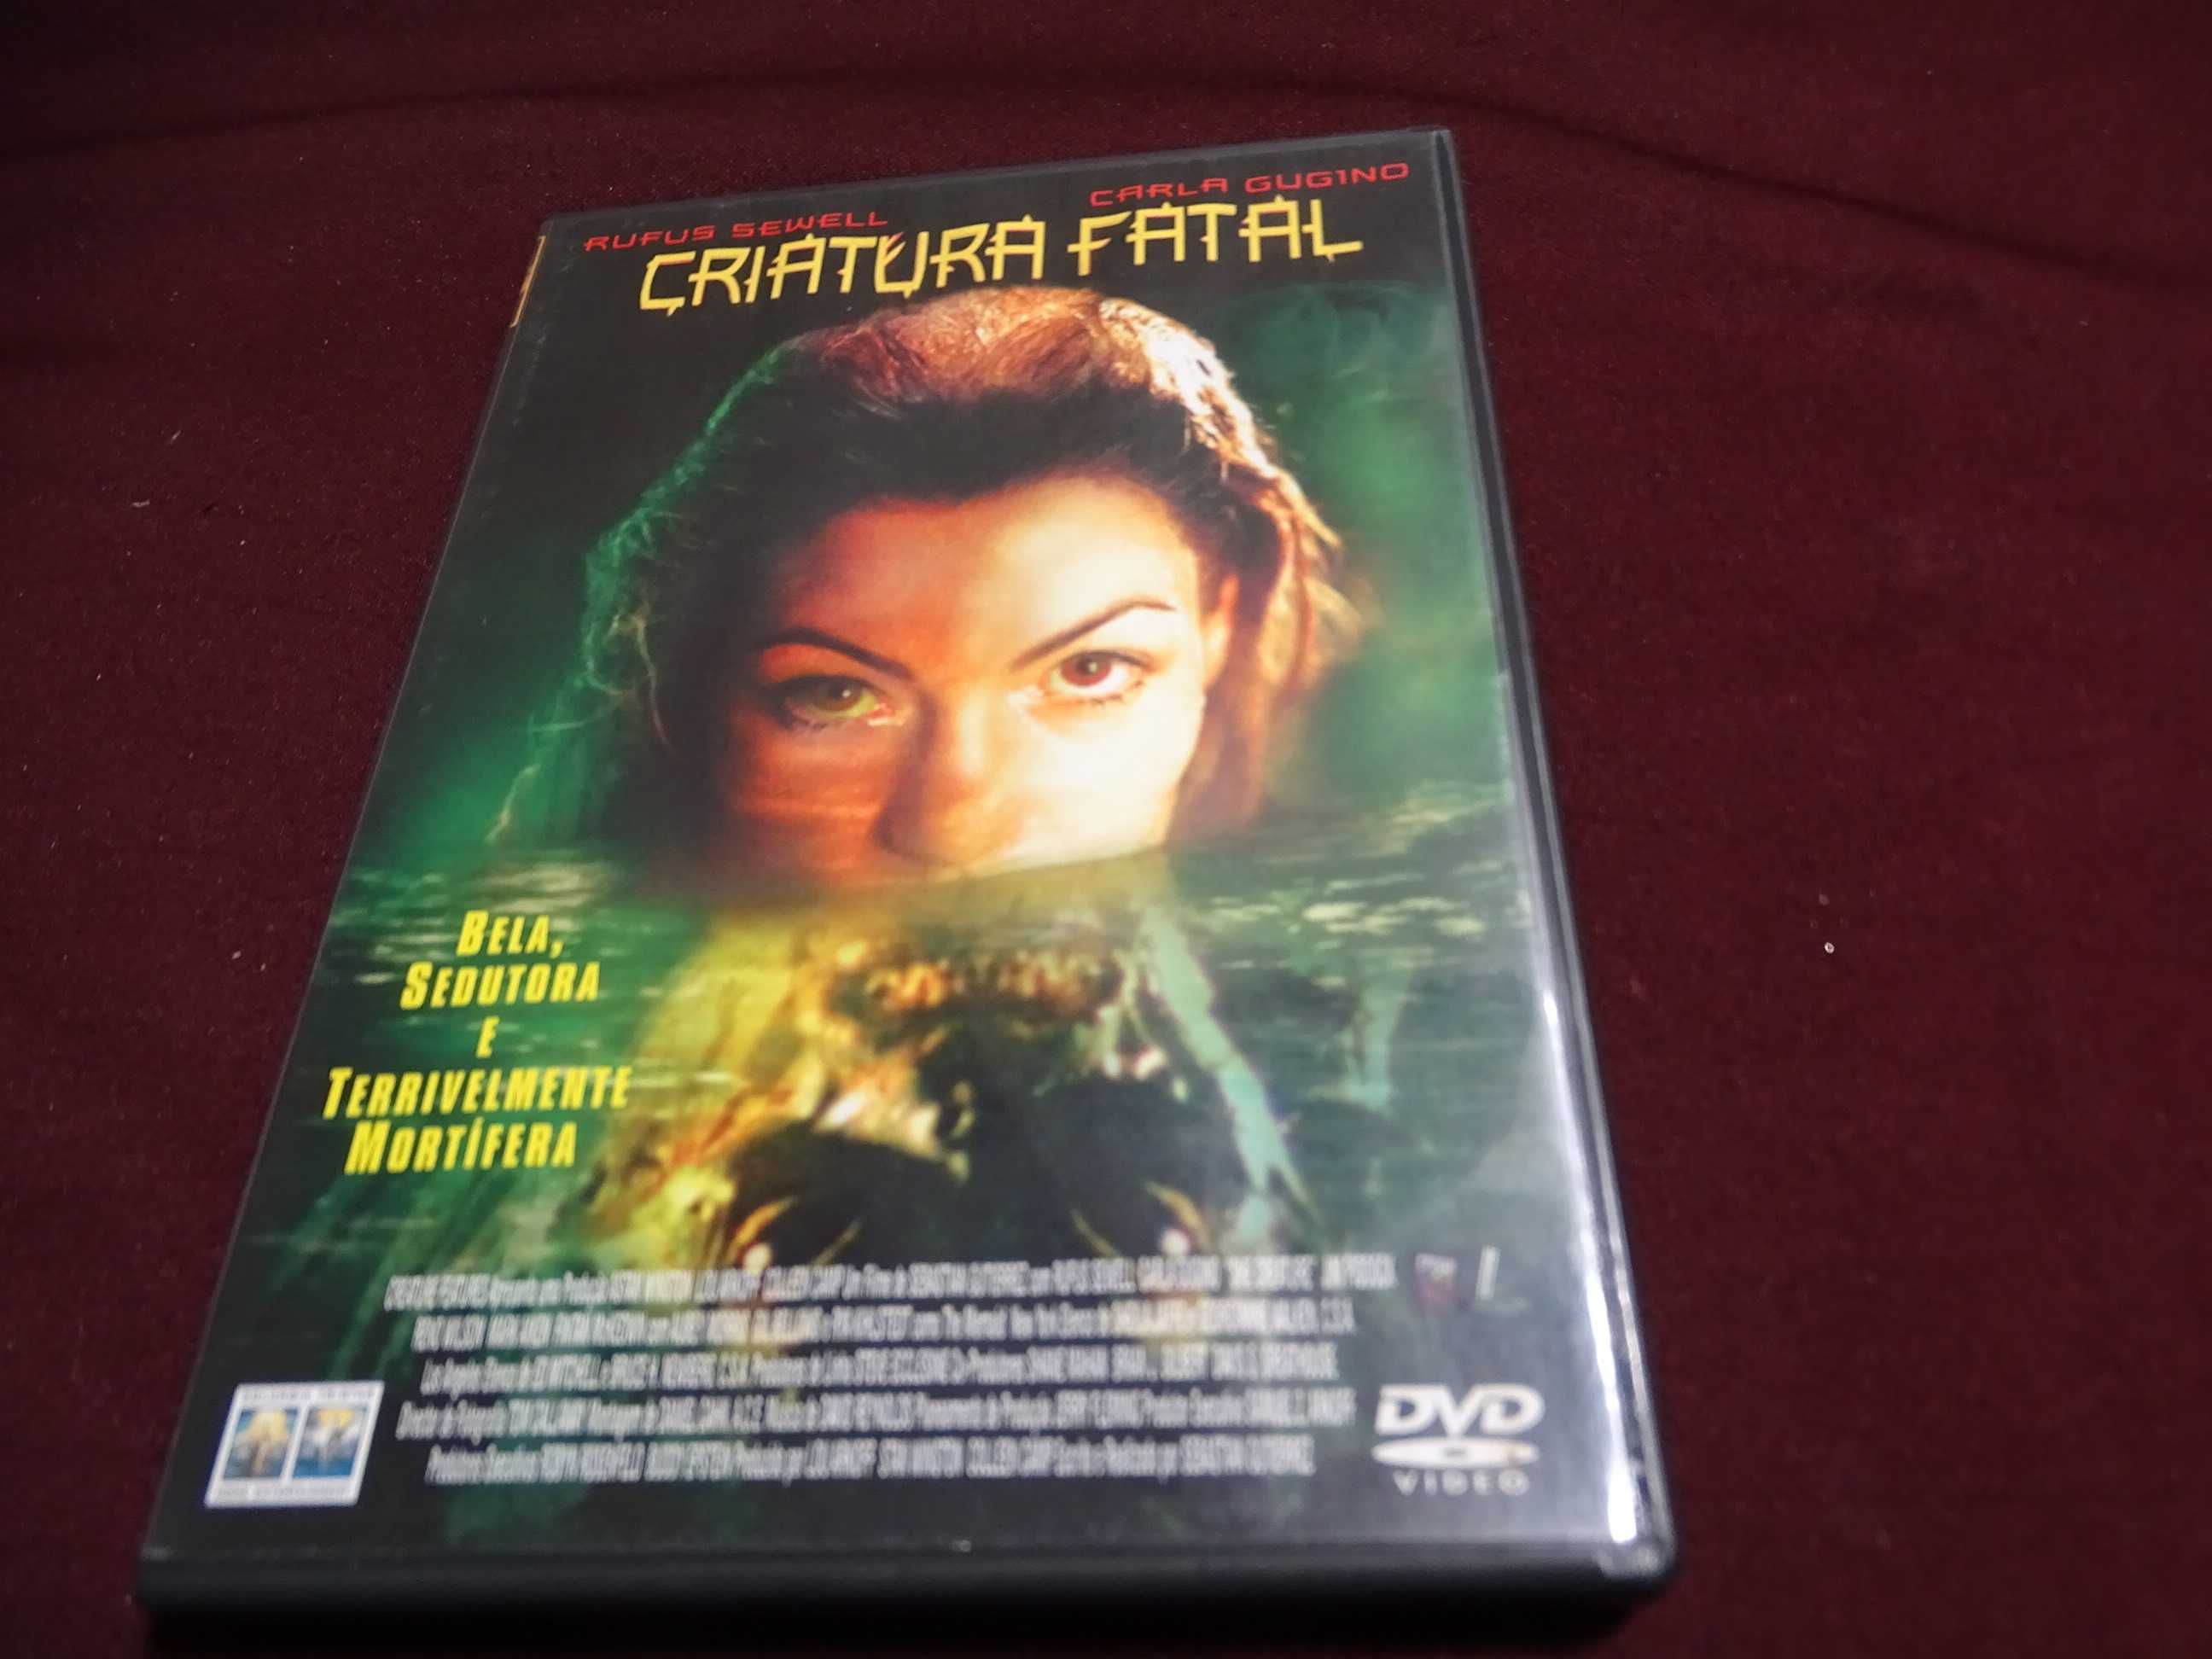 DVD-Criatura fatal-Rufus Sewell/Carla Gugino